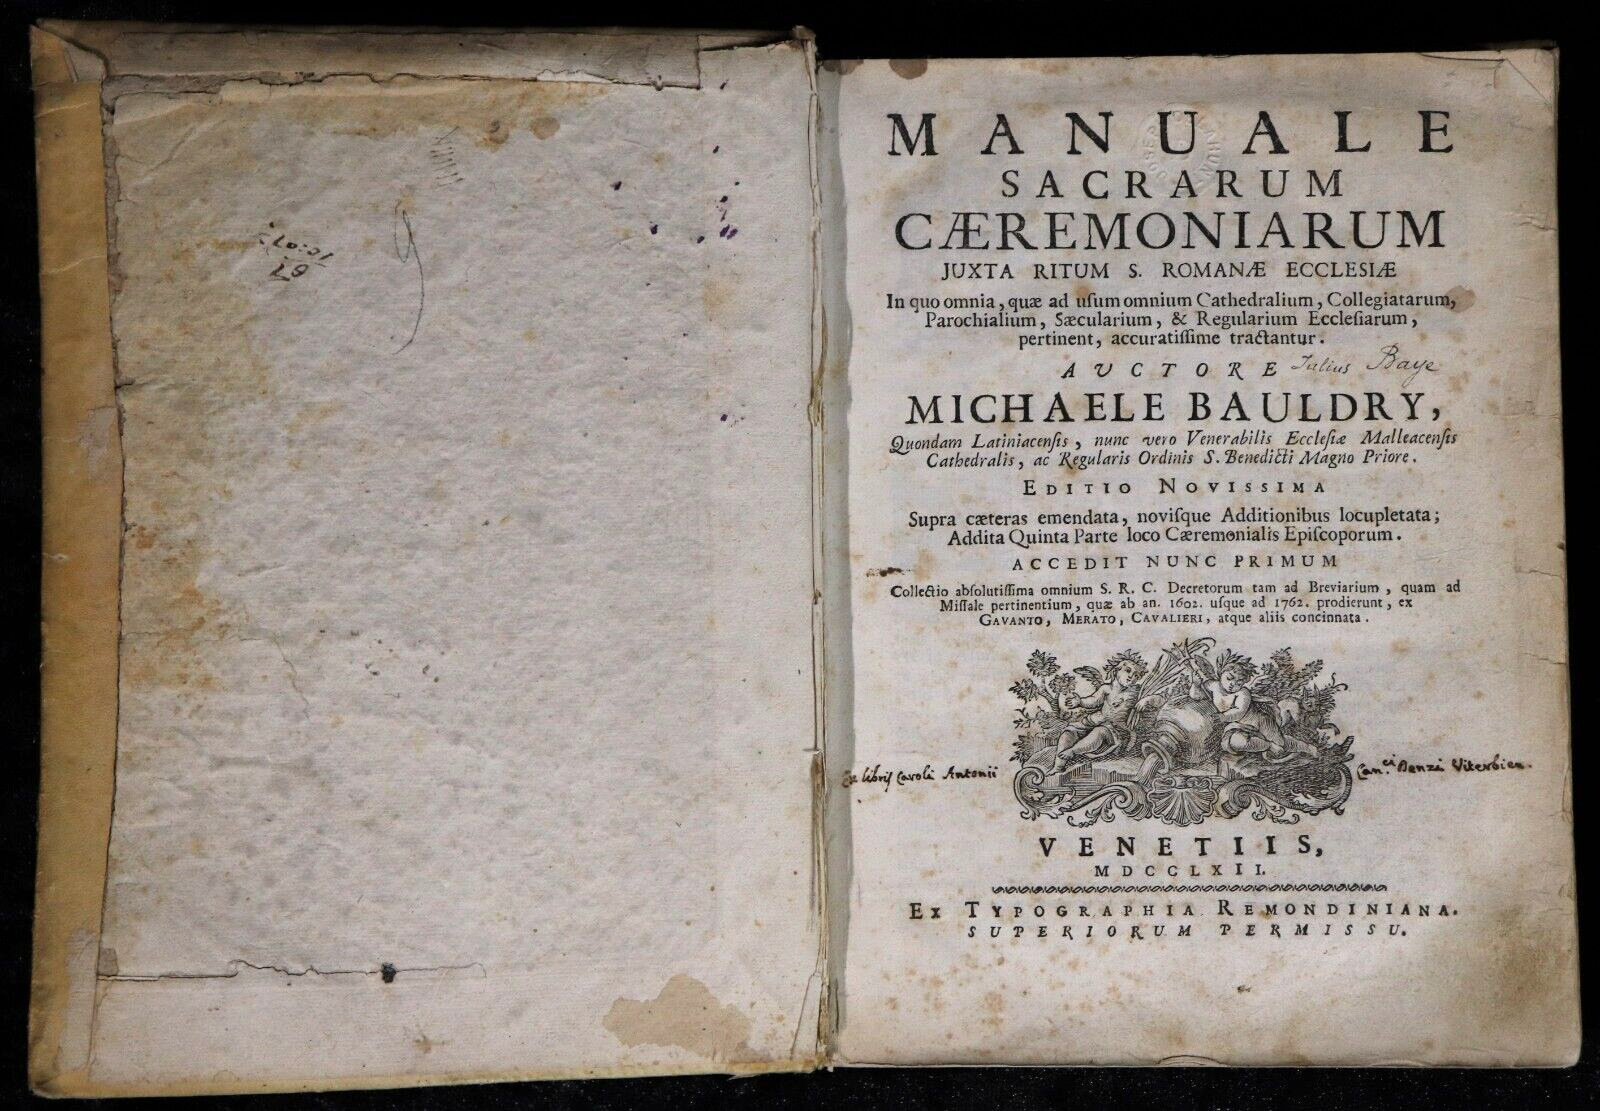 Manuale Sacrarum Caeremoniarum: Michaele Bauldry - 1762 - Antique Theology Book - 0